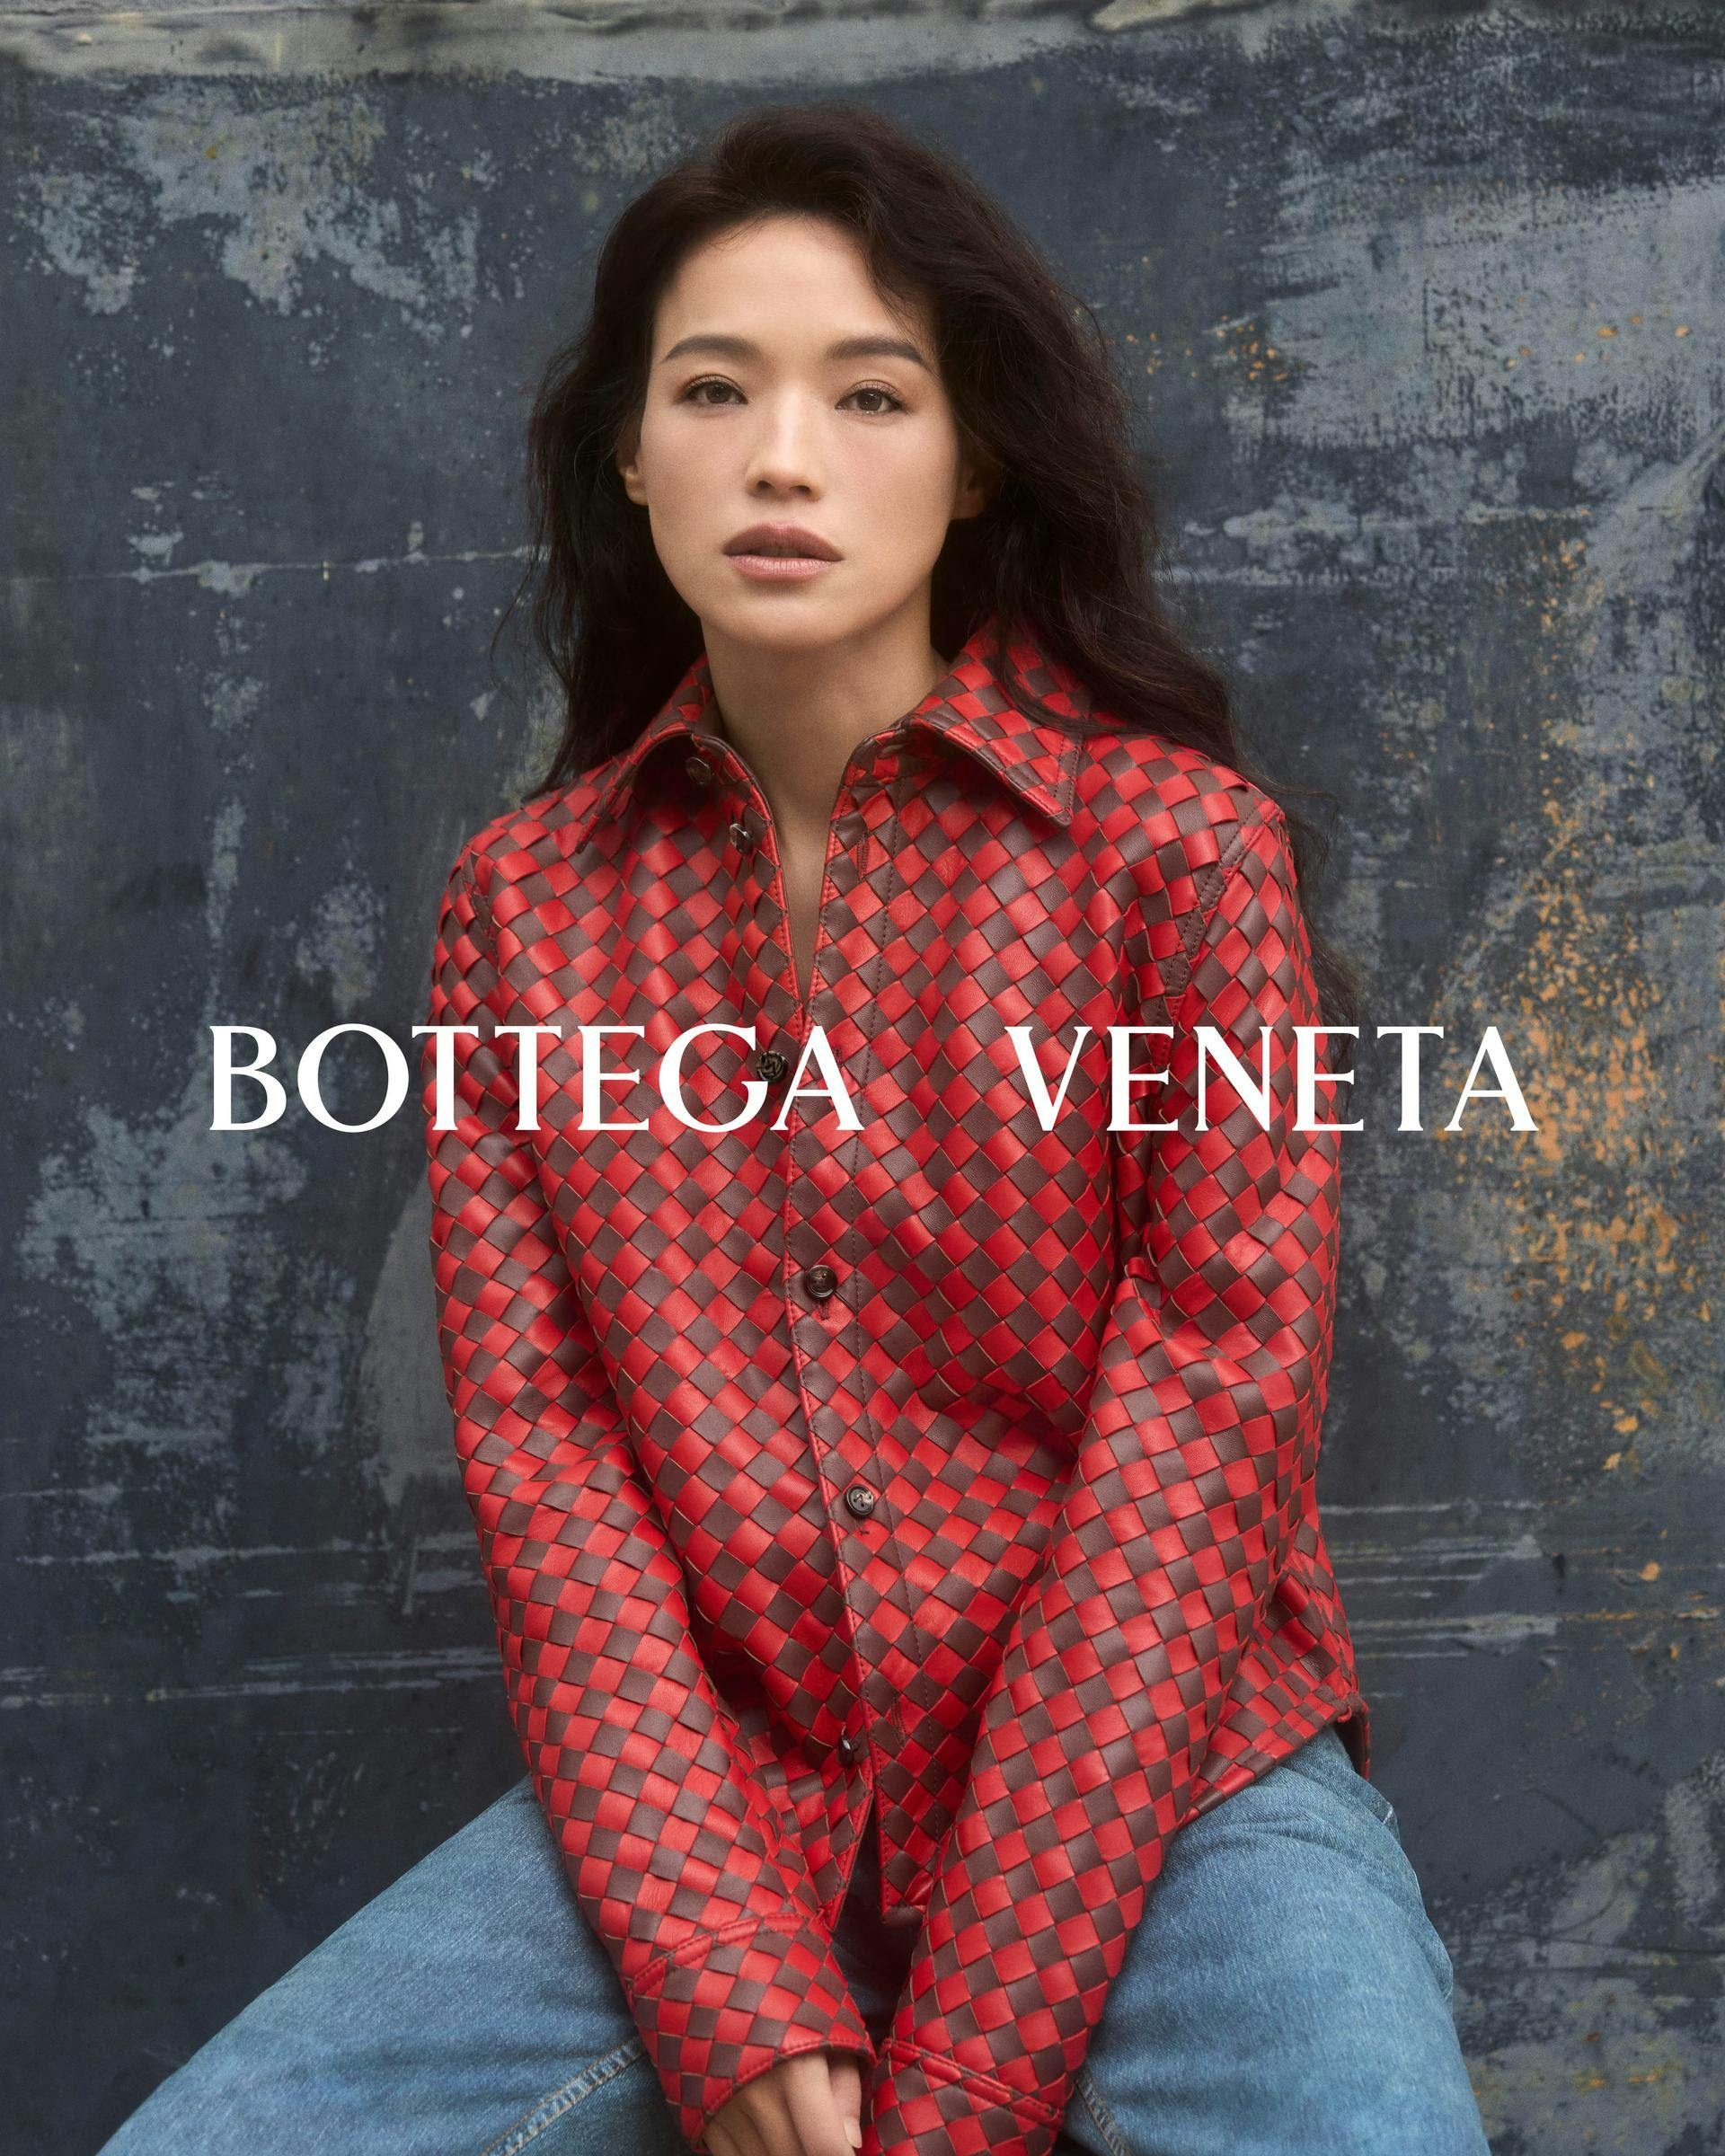 Actress Shu Qi joins the Bottega Veneta family as Newest Global Ambassador